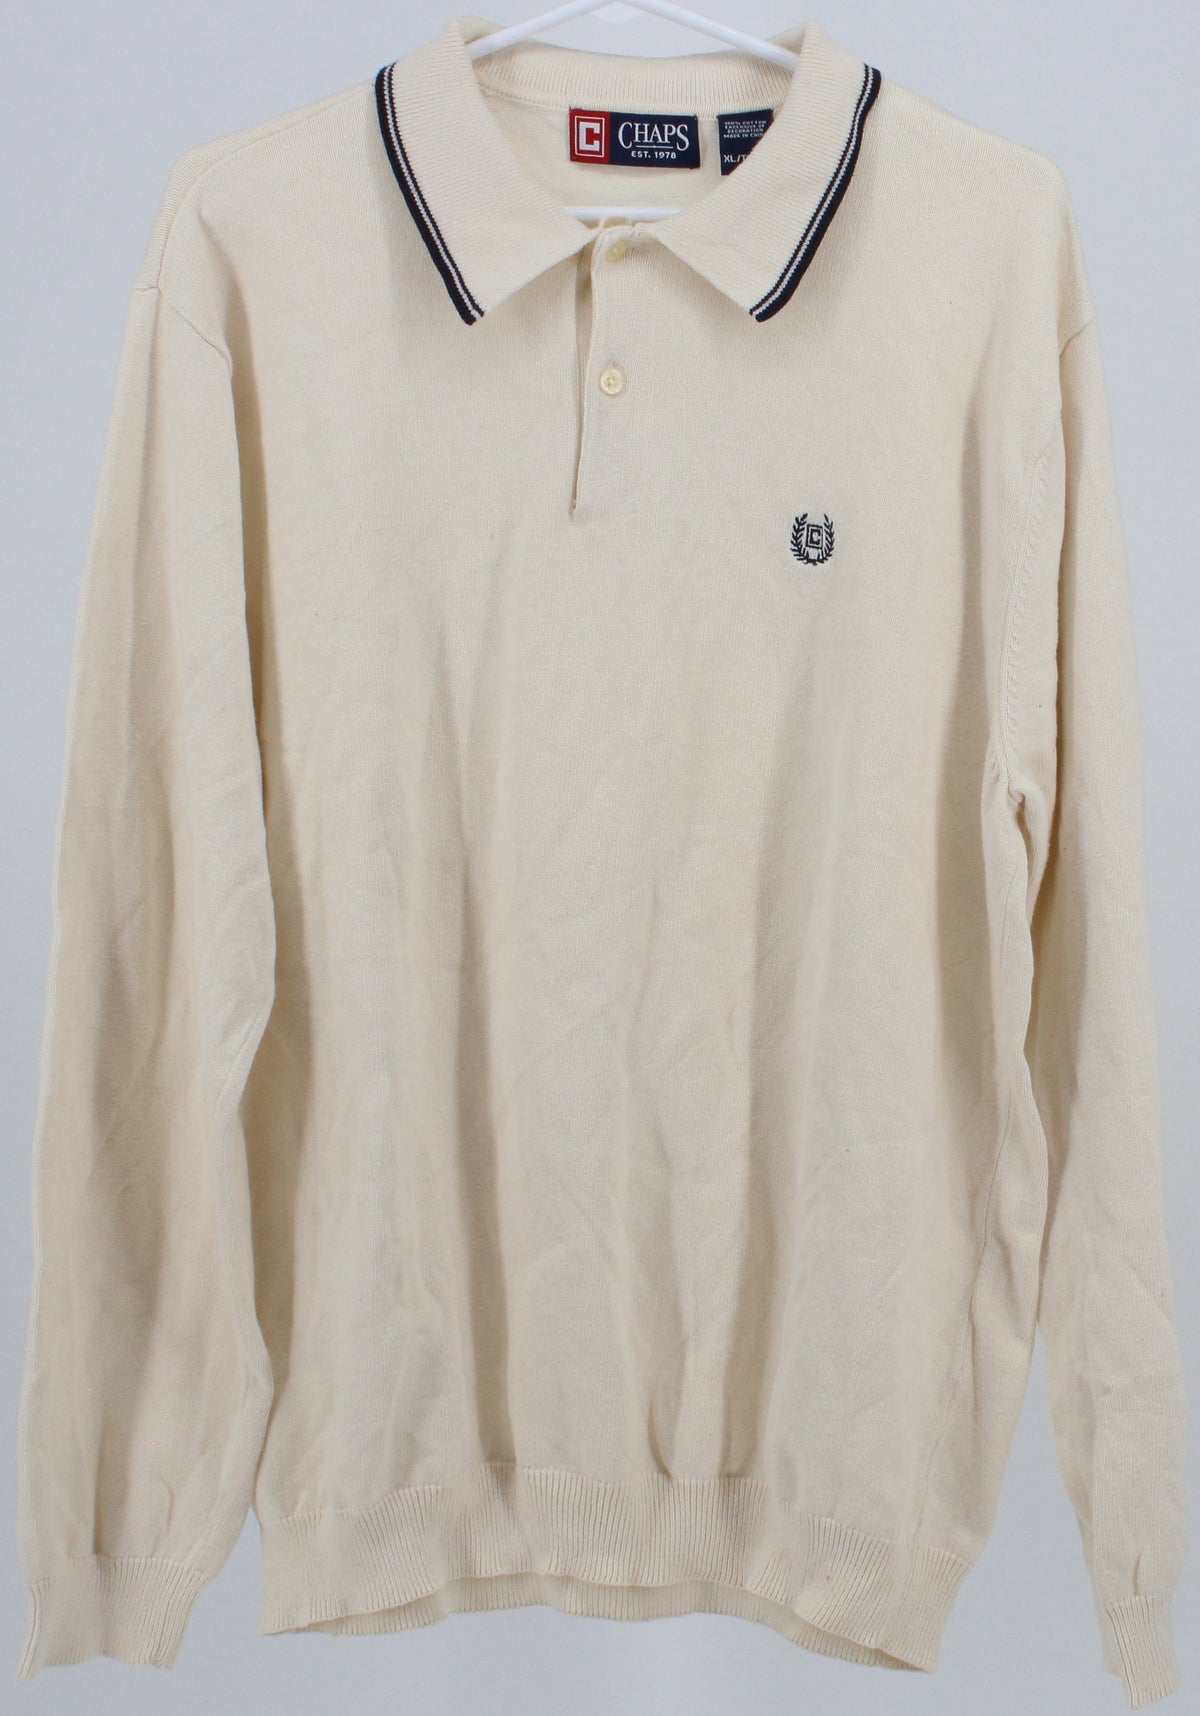 Chaps Off White Long Sleeve Golf Shirt